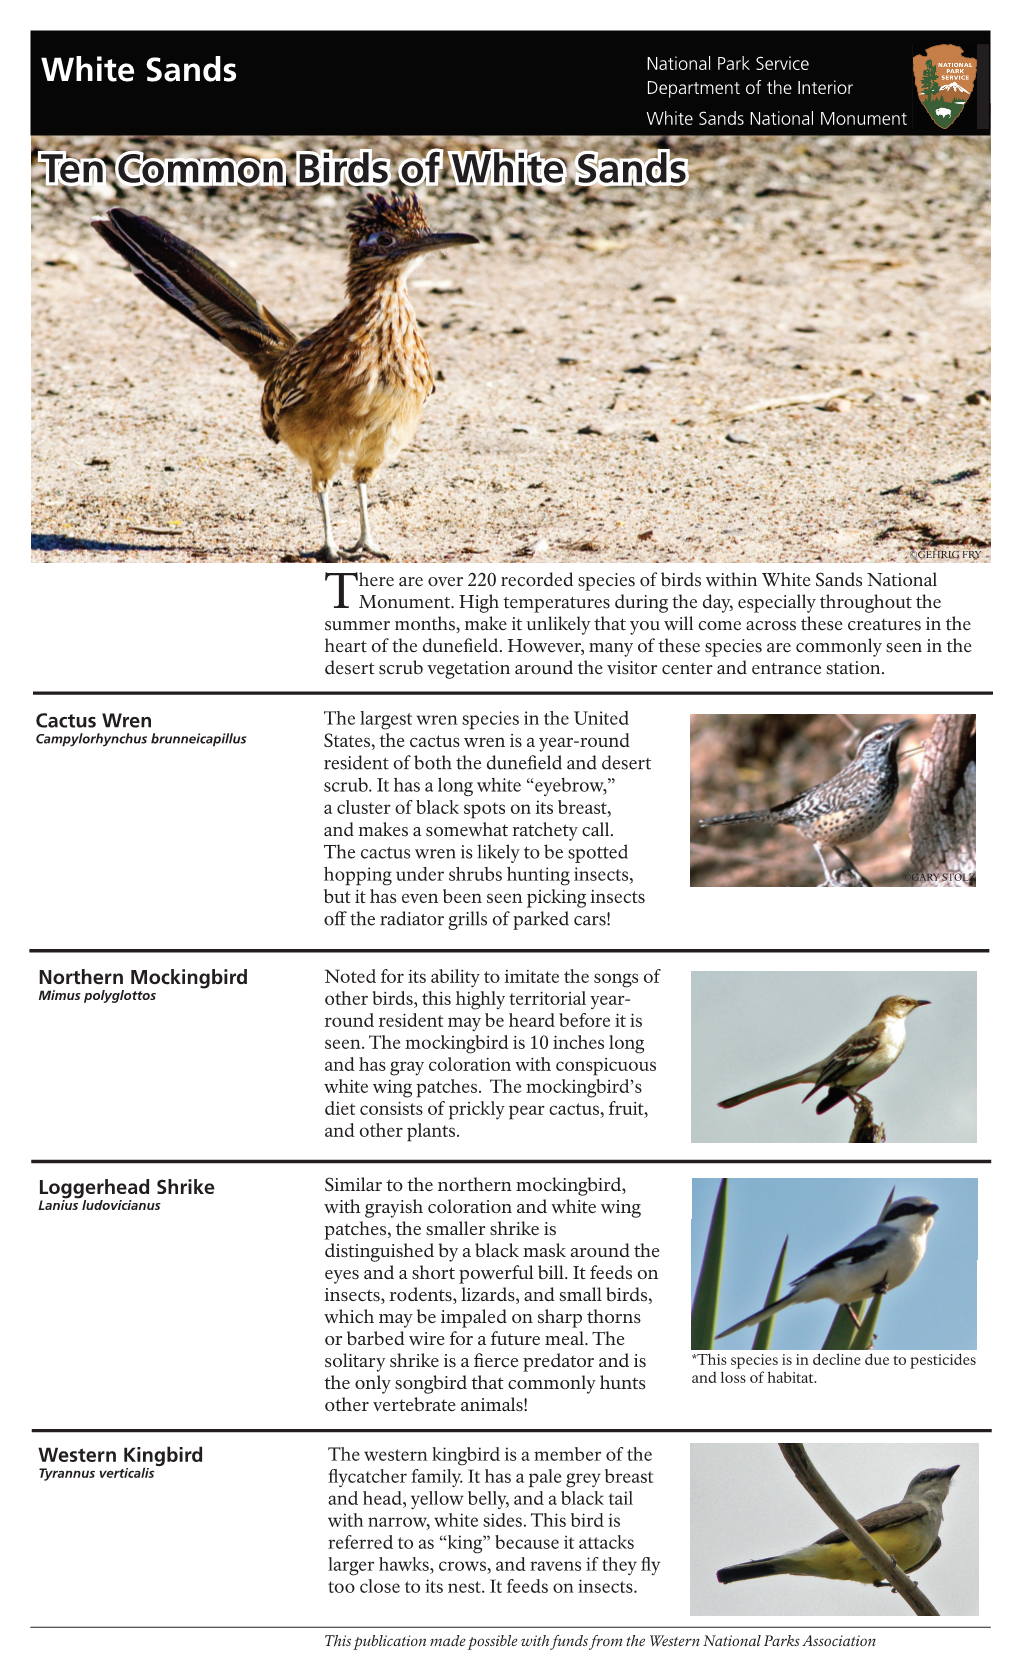 Ten Common Birds of White Sands